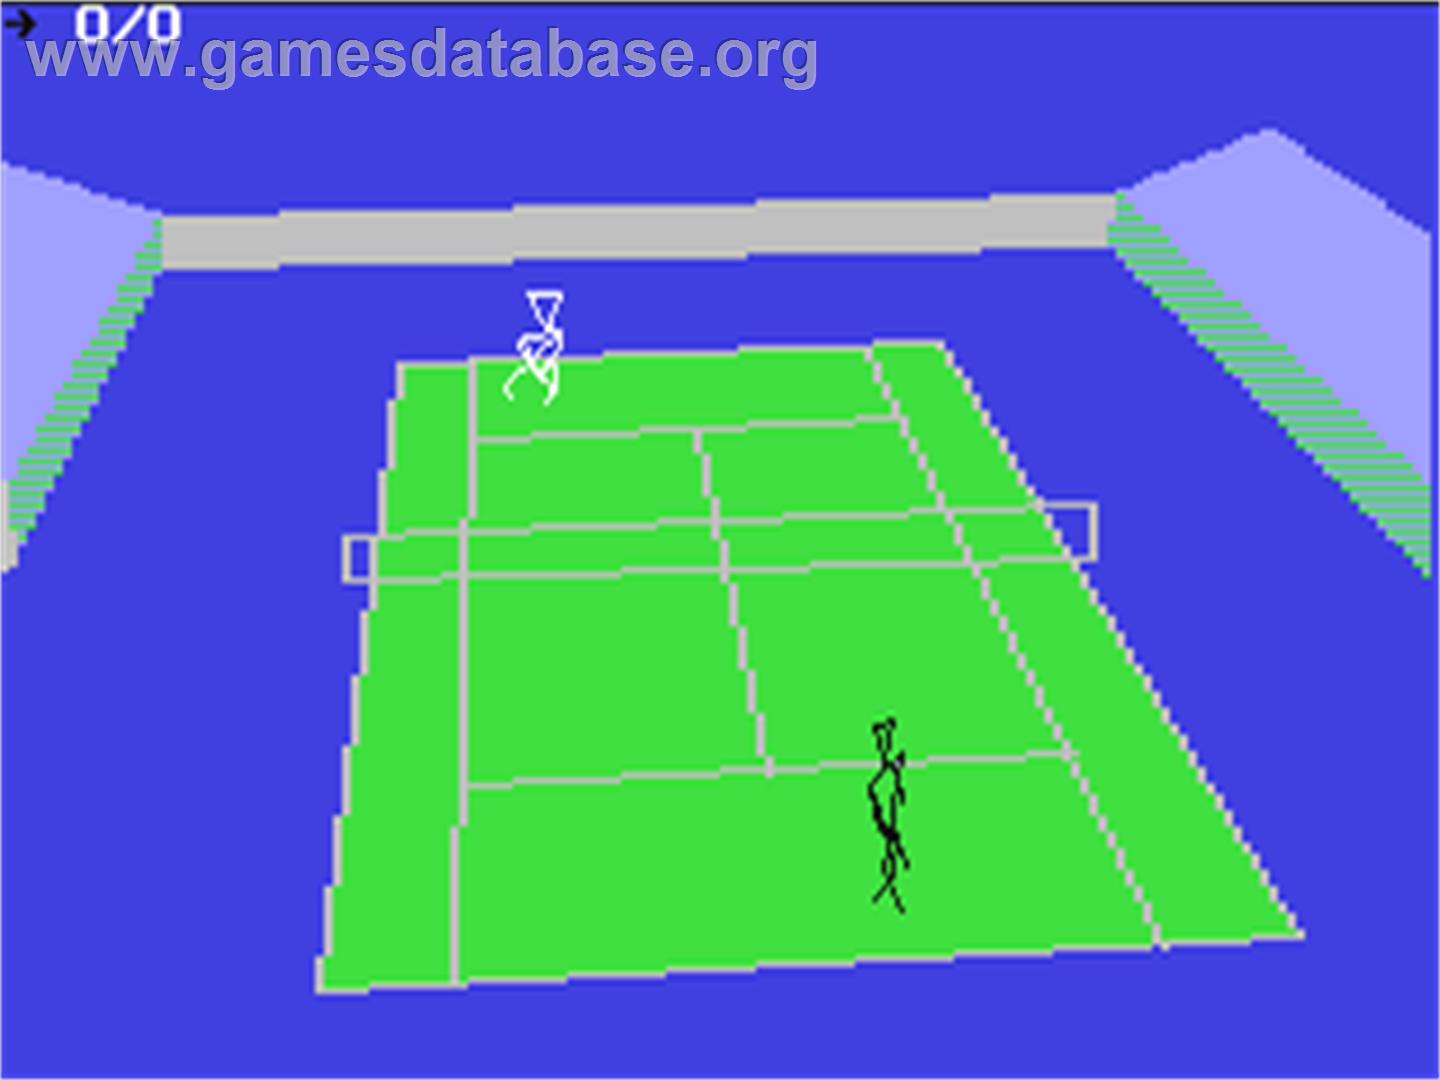 International 3D Tennis - Commodore 64 - Artwork - In Game